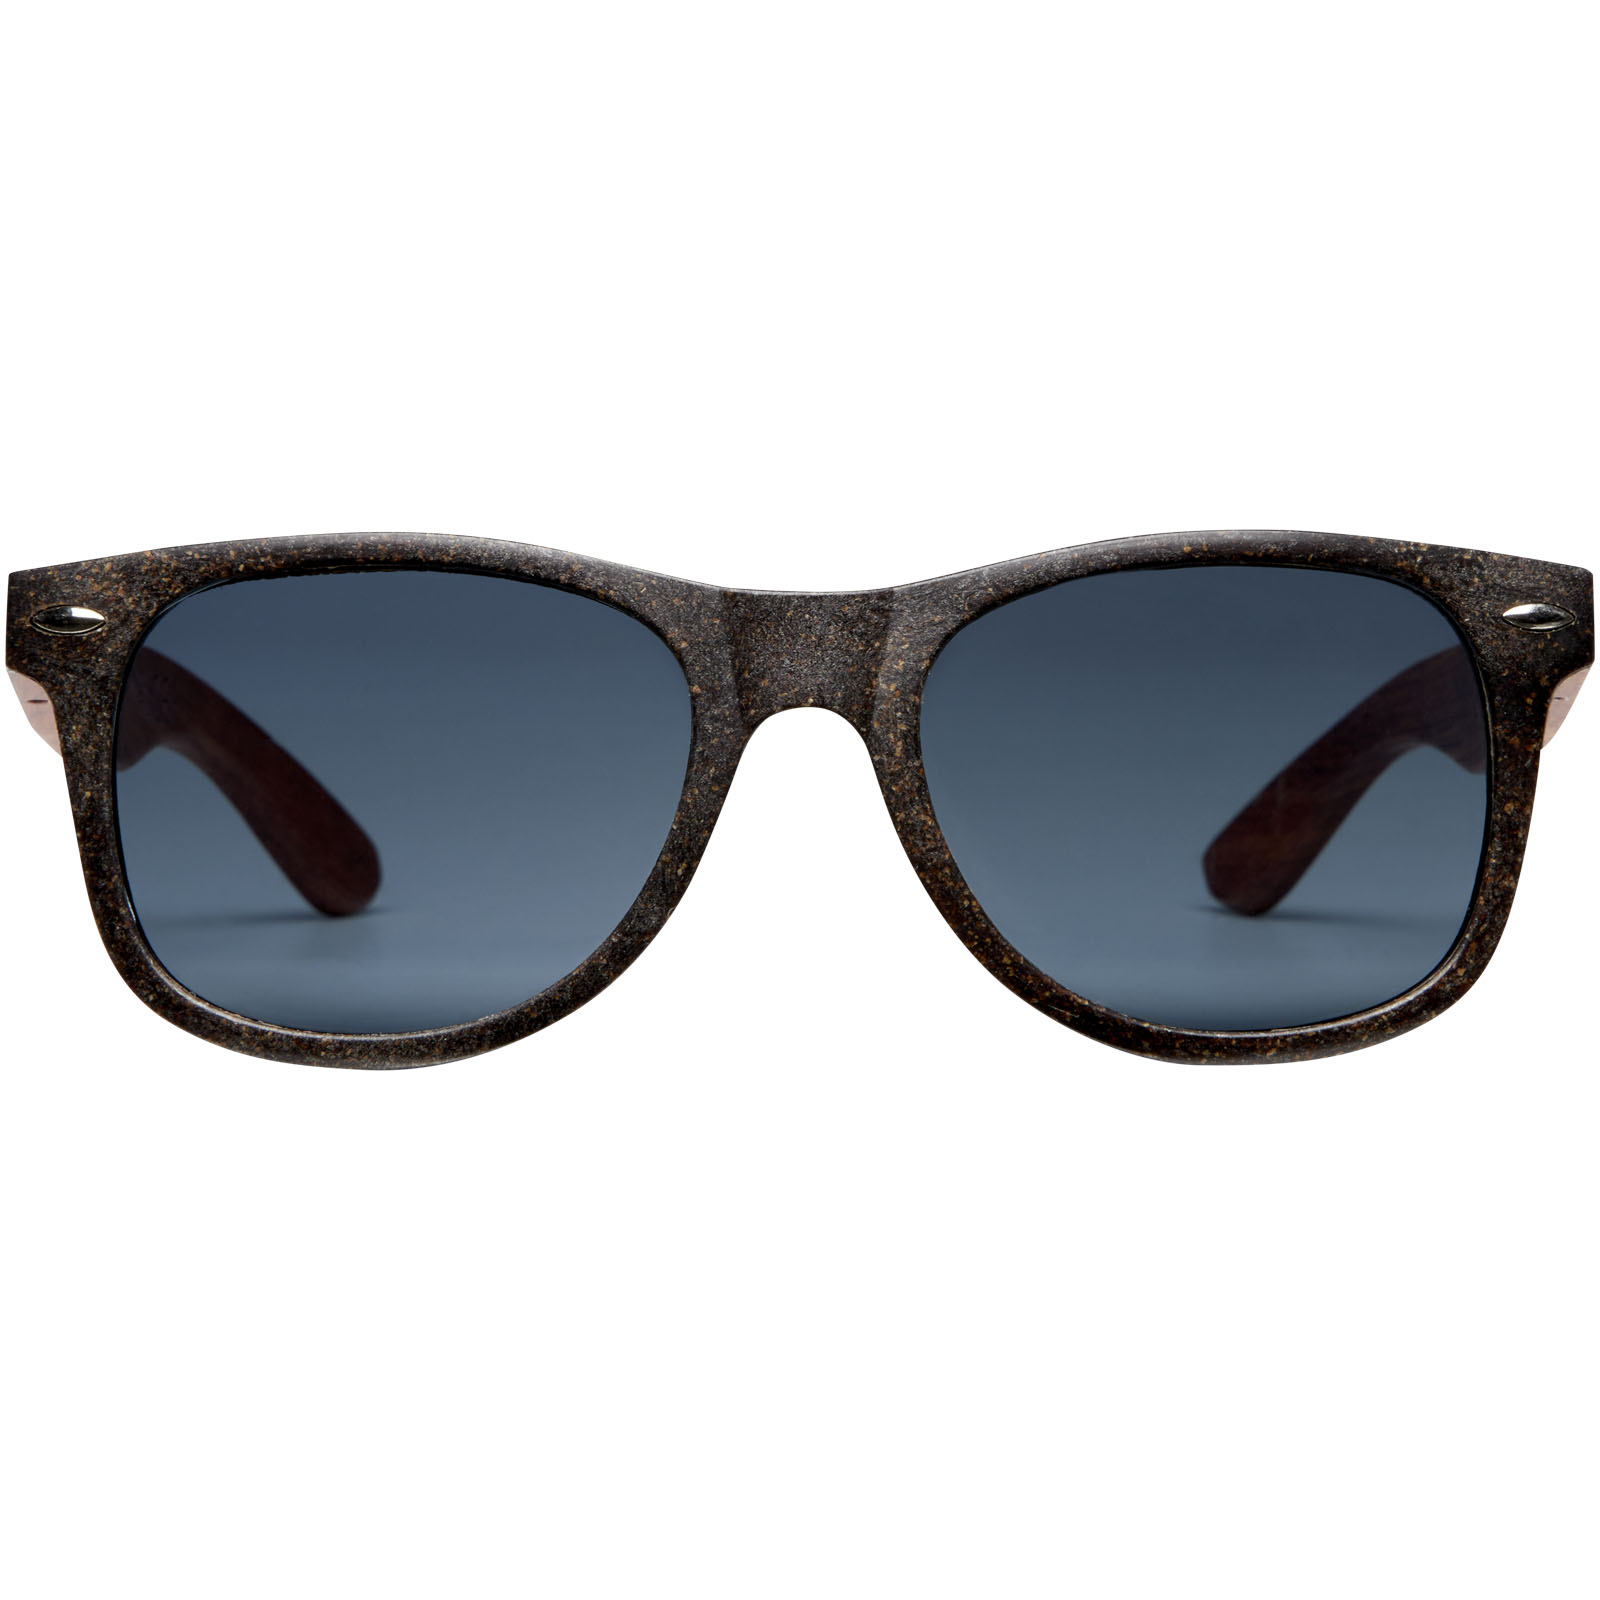 Advertising Sunglasses - Kafo sunglasses - 1